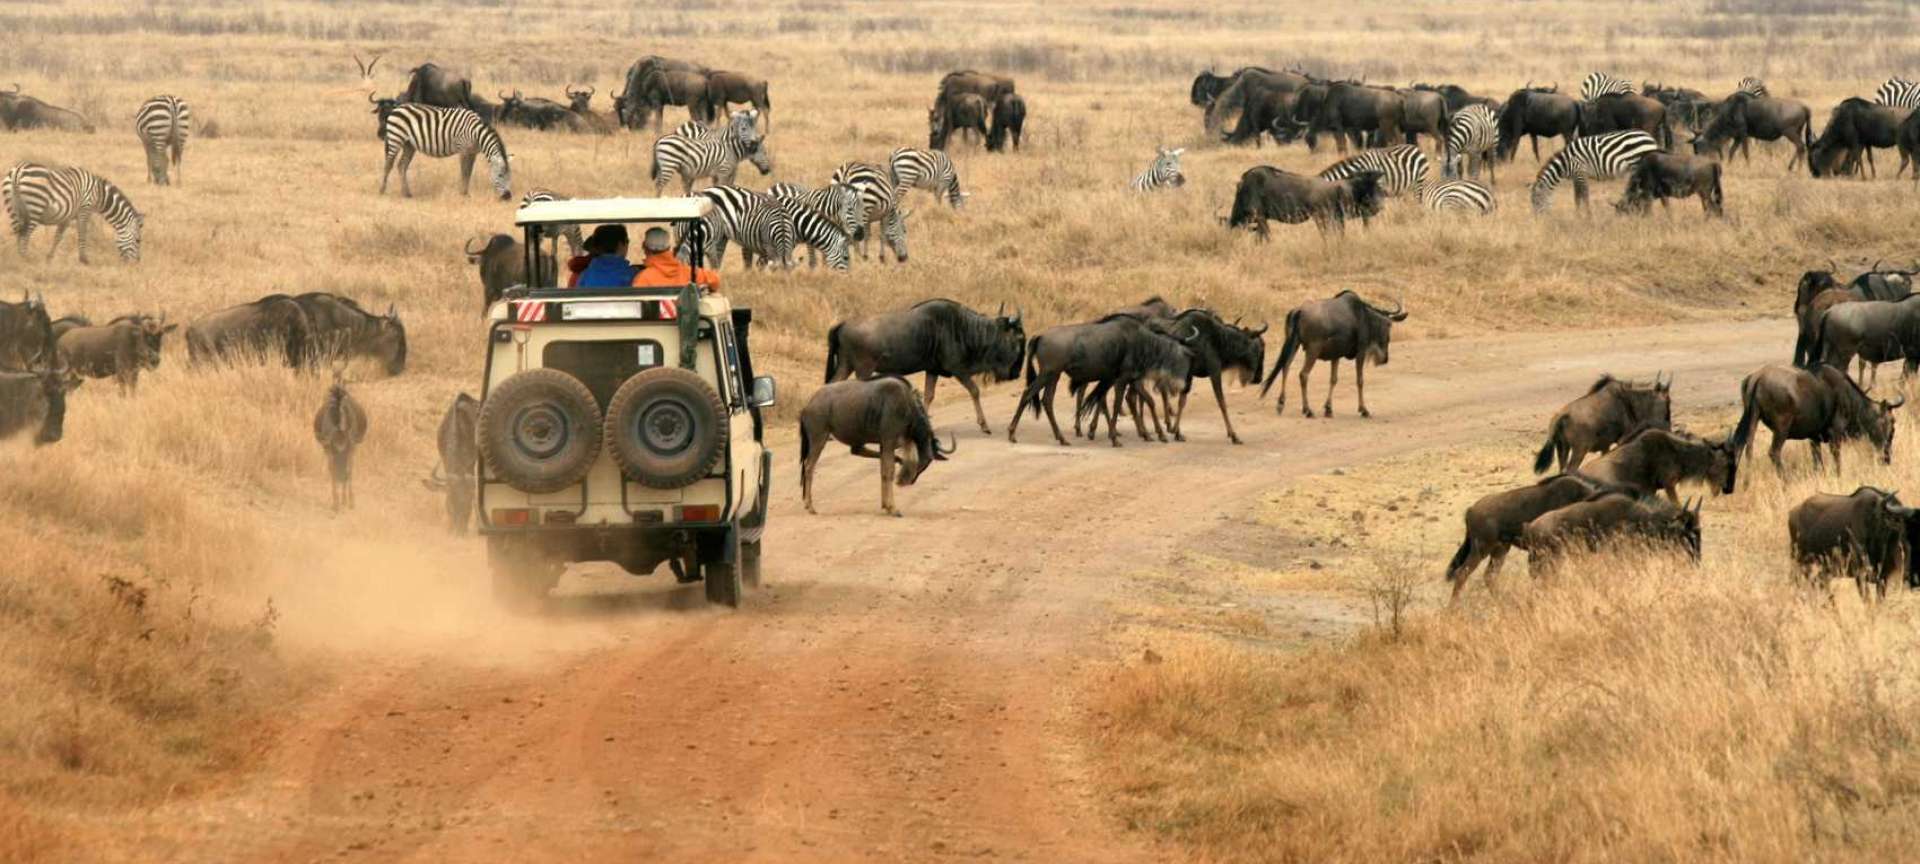 Tanzania Safari Tours & Experiences & Vacations